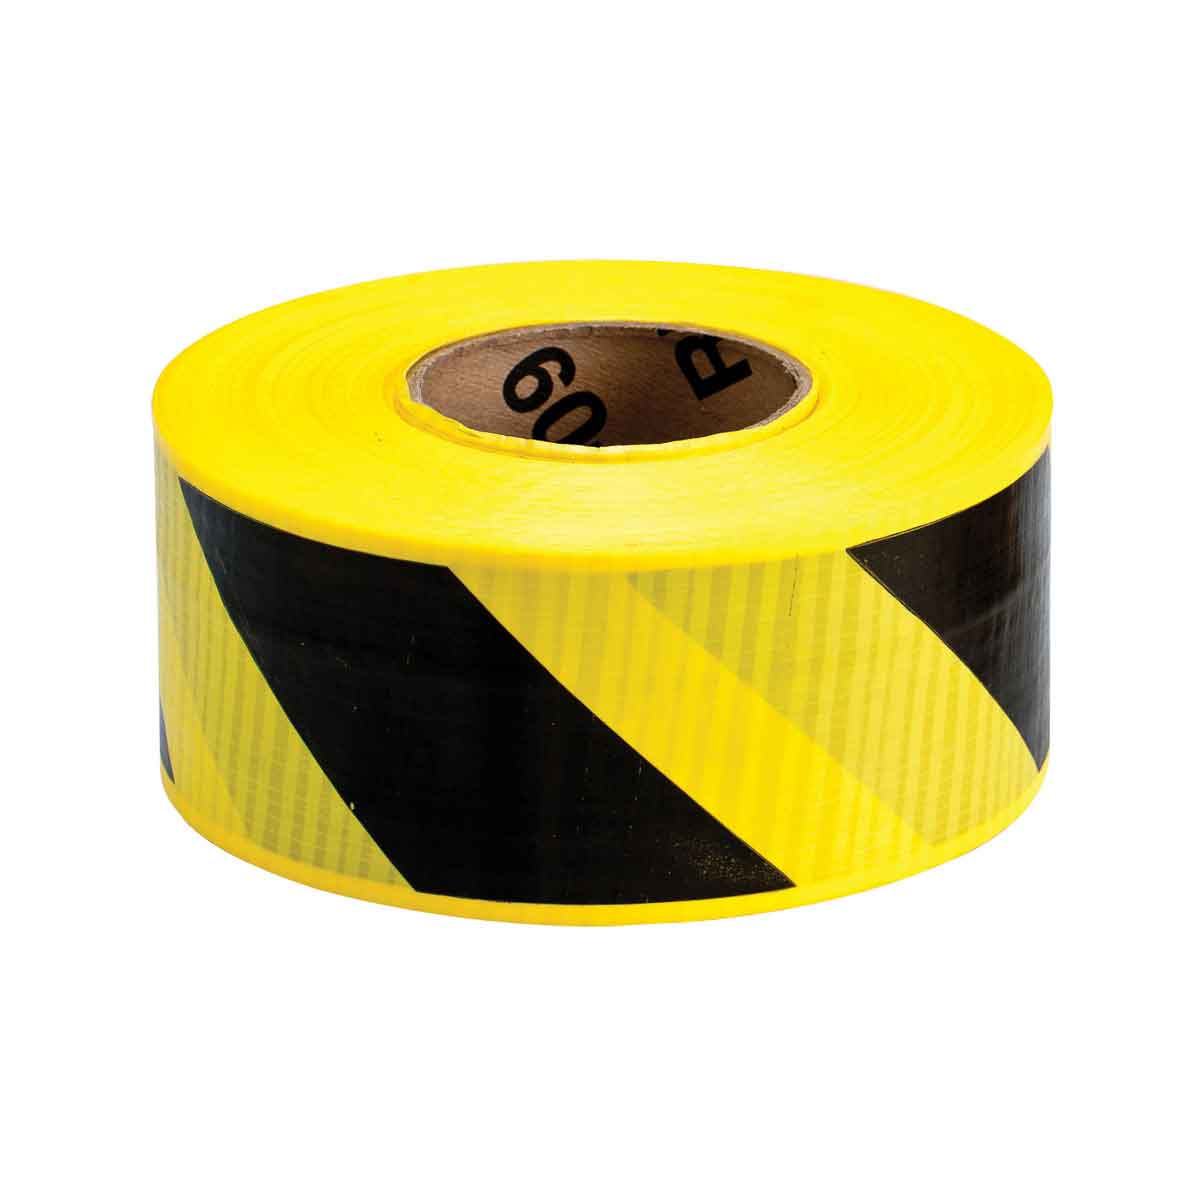 barricade tape